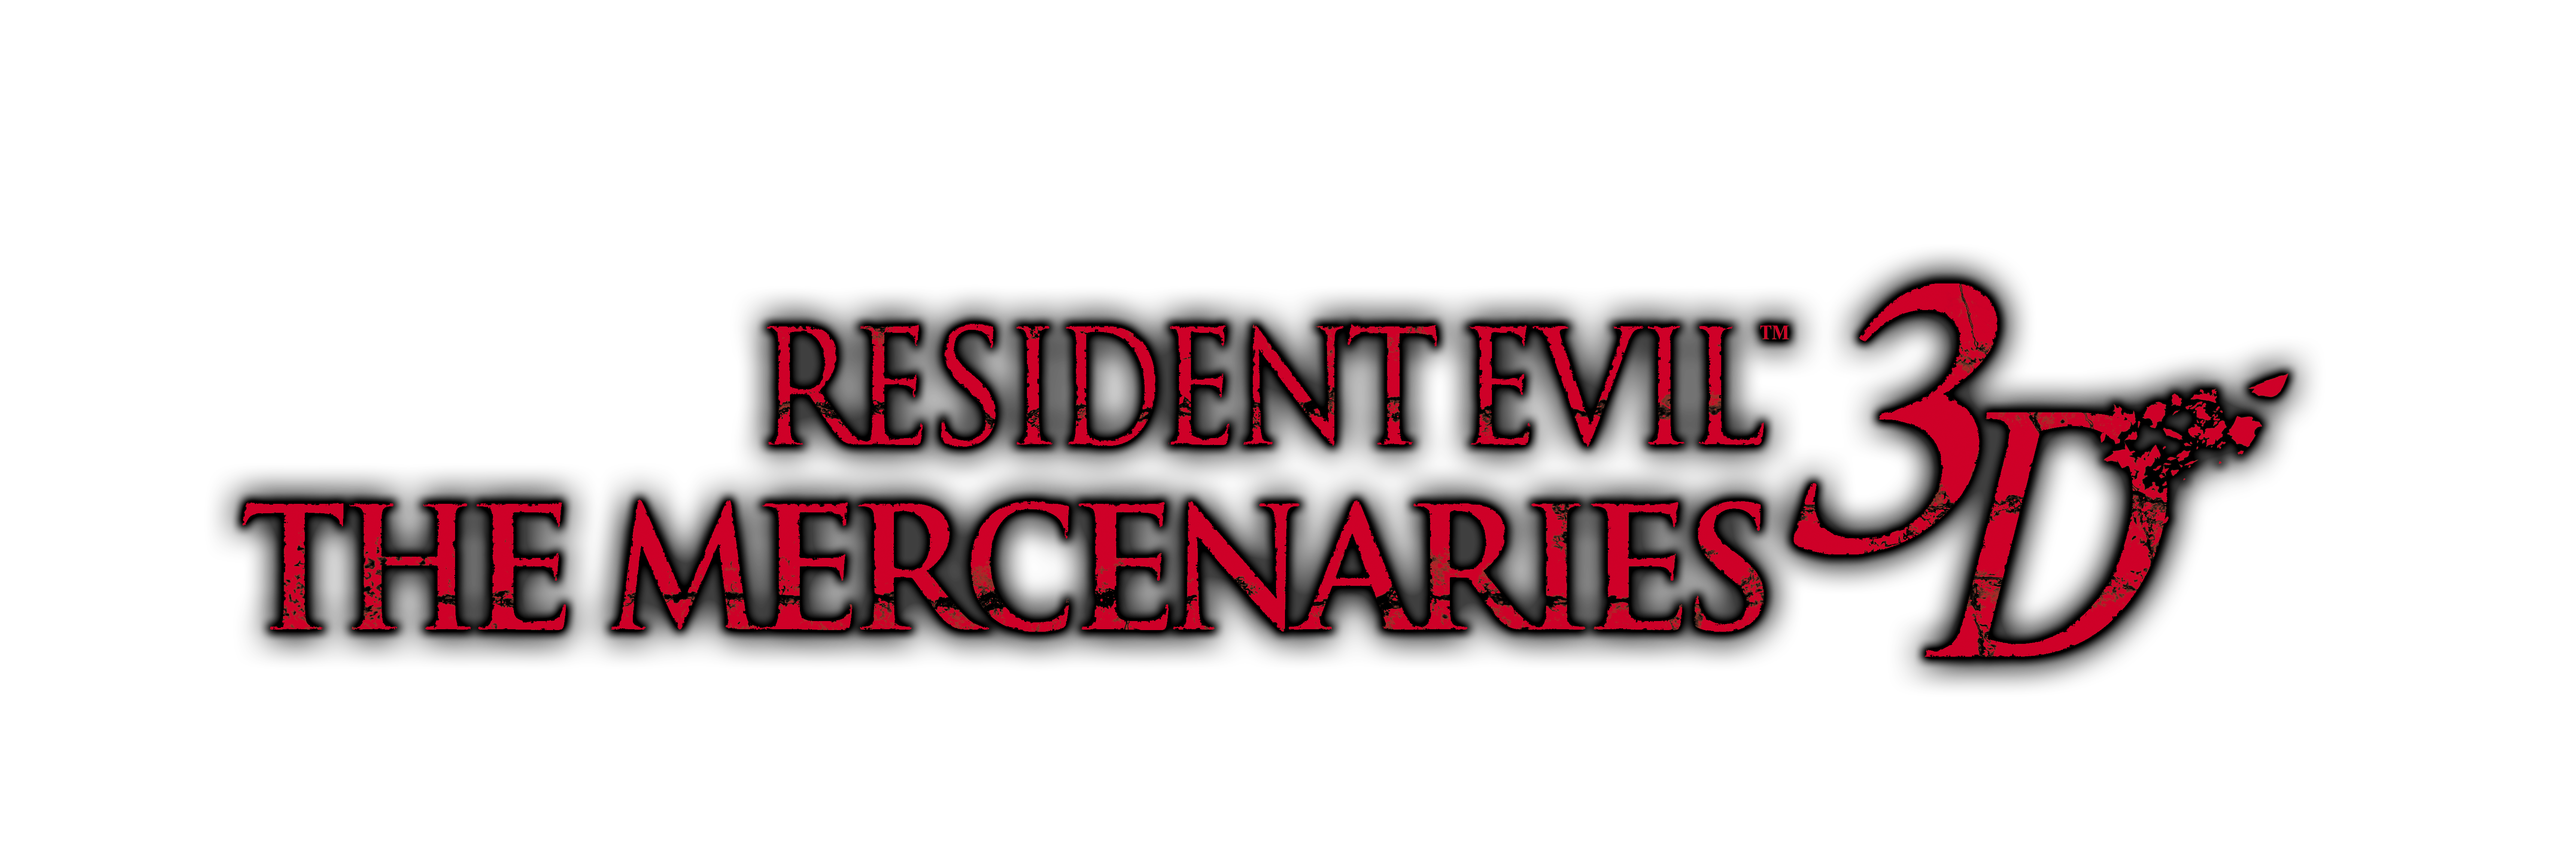 Video Game Resident Evil: The Mercenaries 3D HD Wallpaper | Background Image